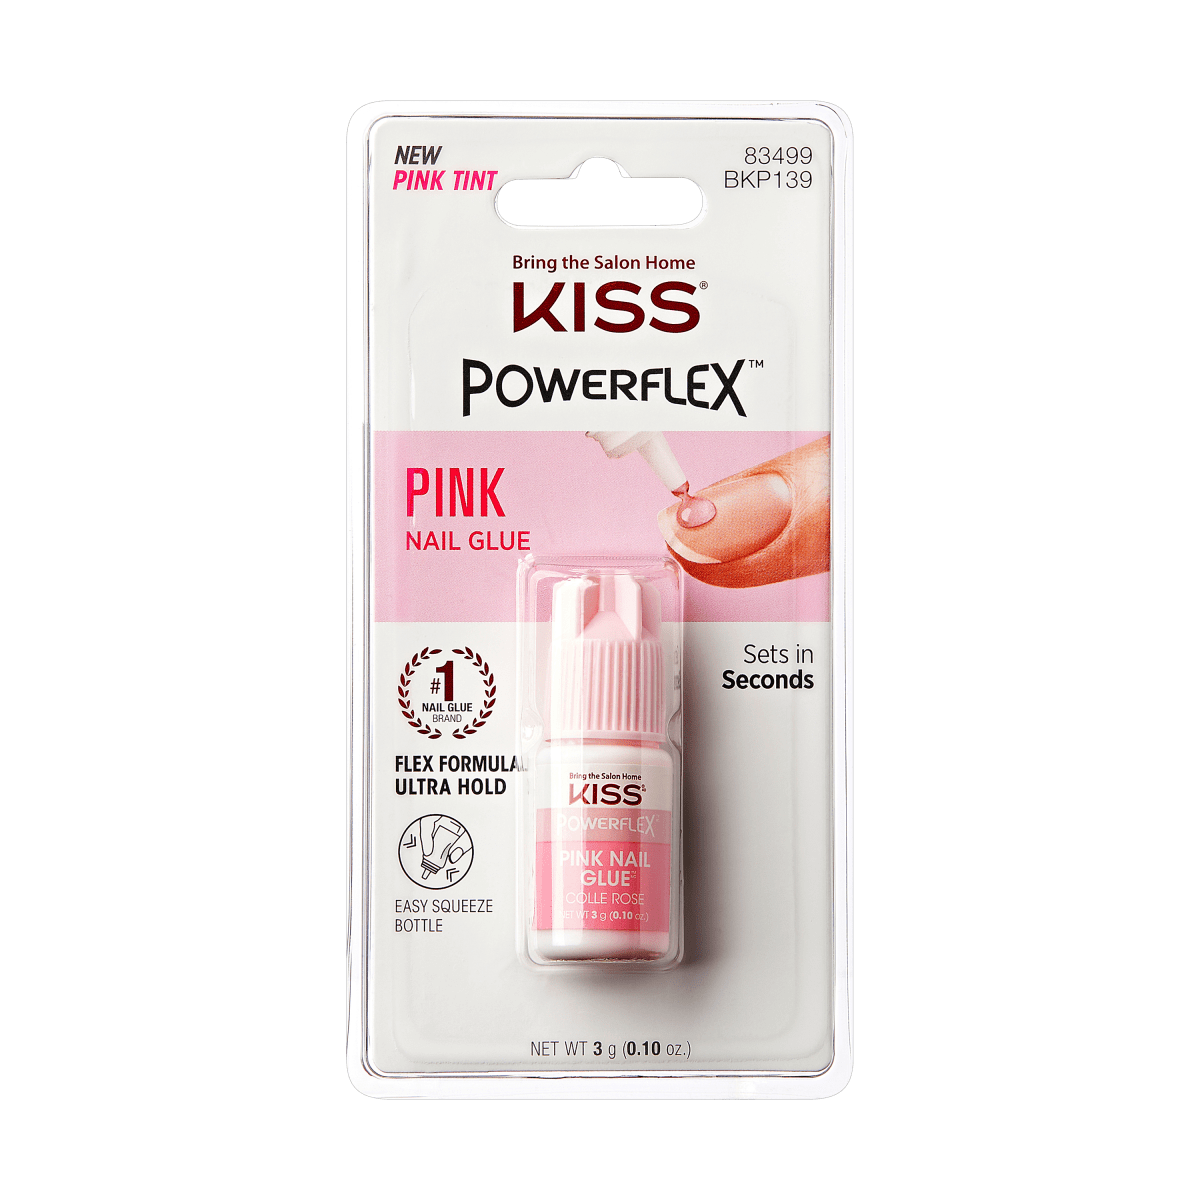 Kiss Powerflex Pink Nail Glue, 0.10 Oz (BKP139)